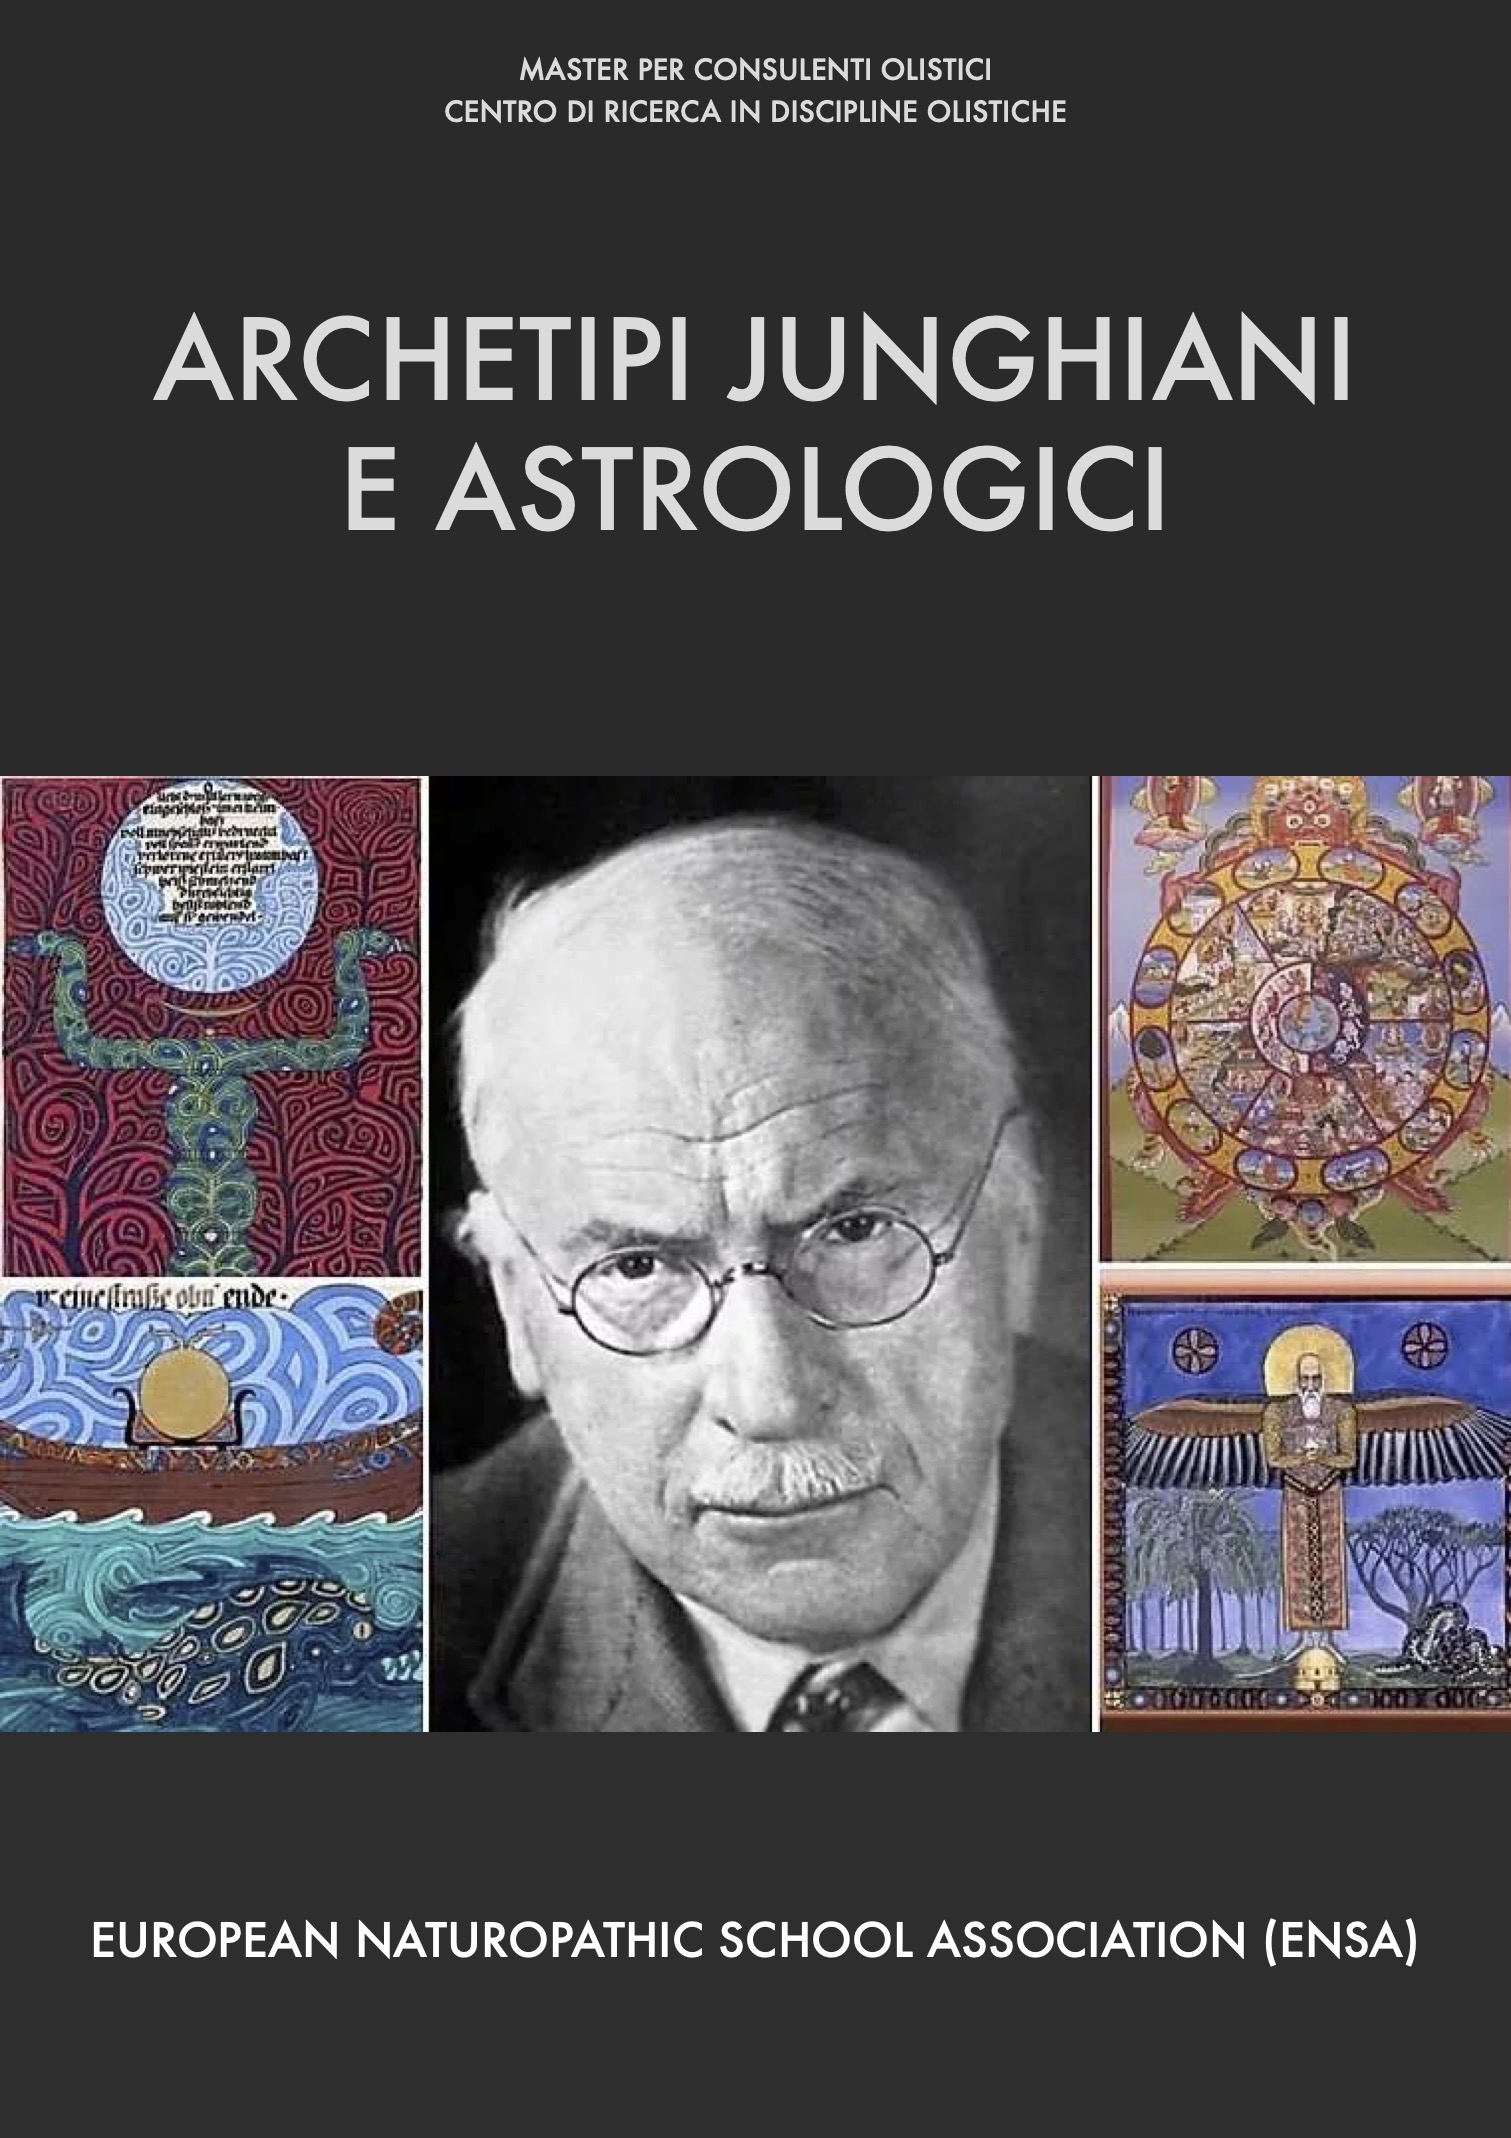 Archetipi Junghiani e astrologici